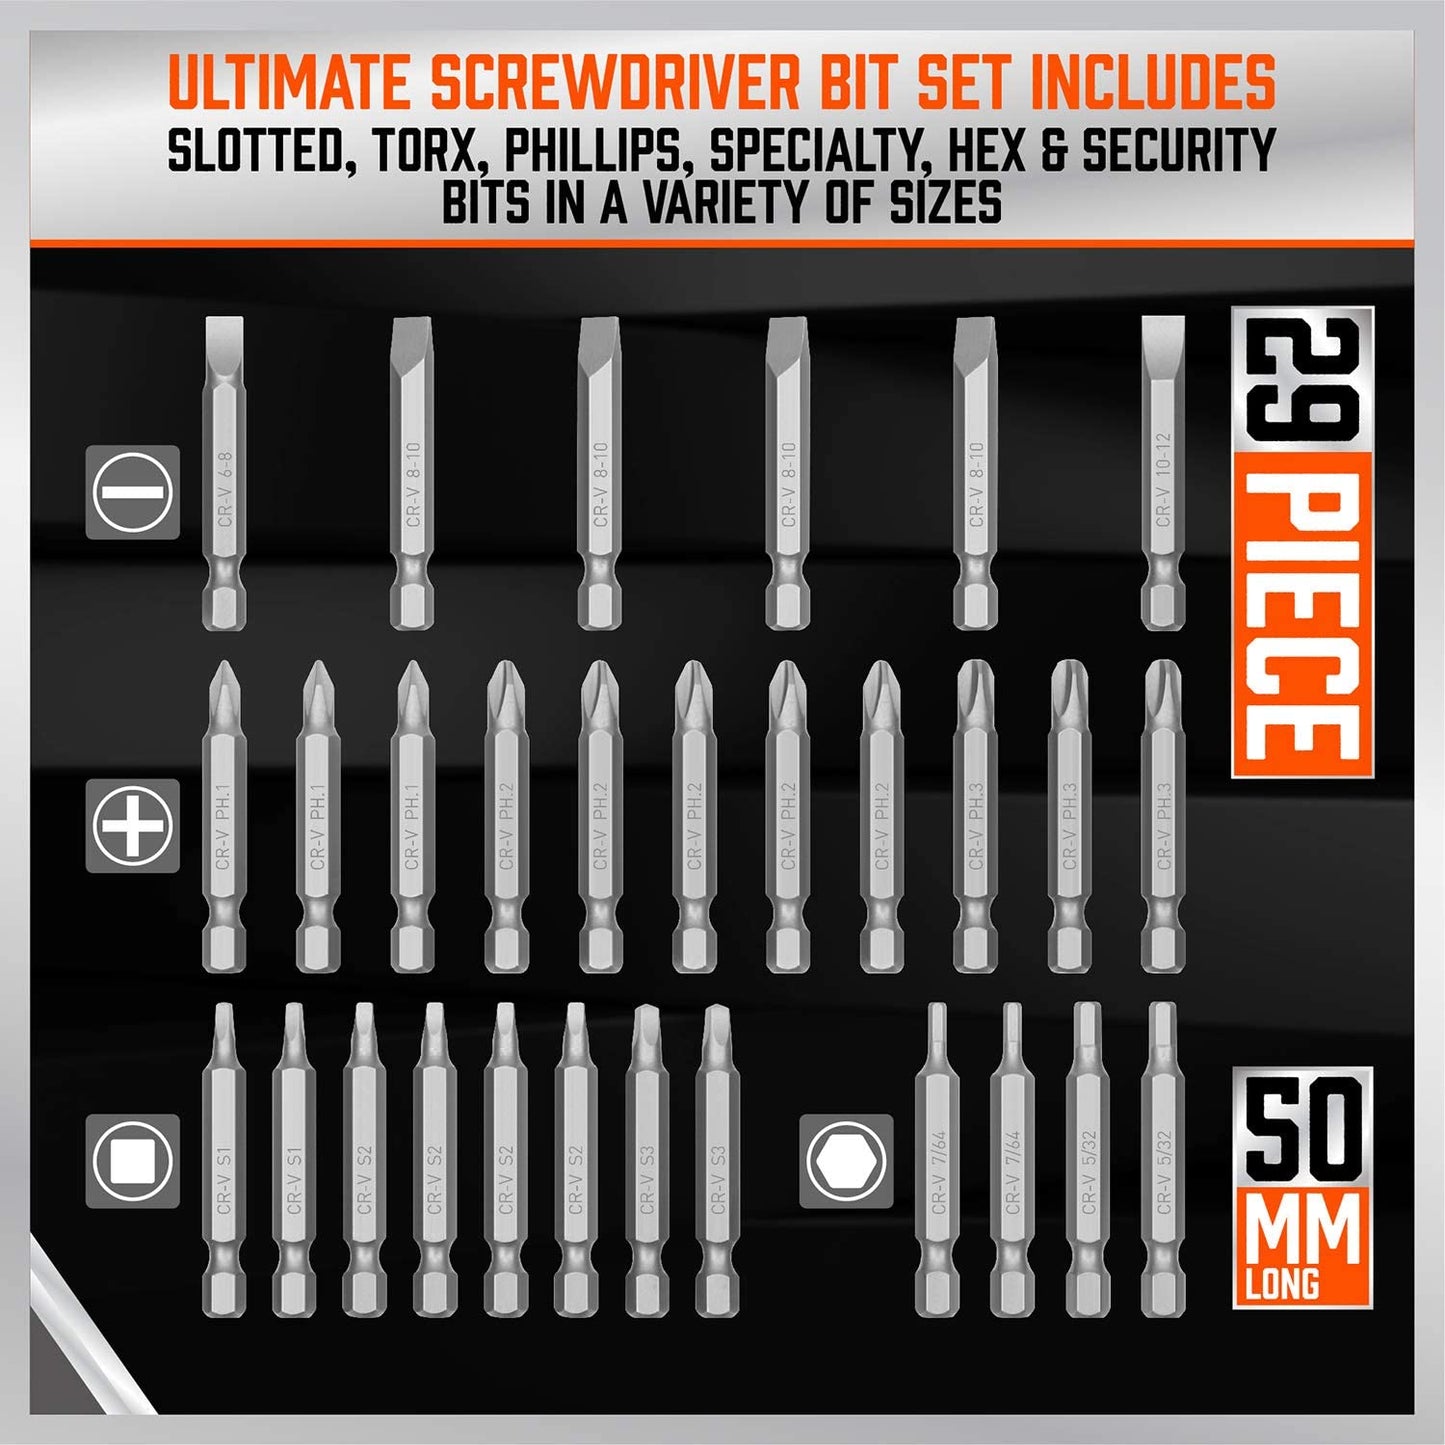 208-Piece Professional Screwdriver Bit Set, Chrome Vanadium Steel, Includes Security Bits